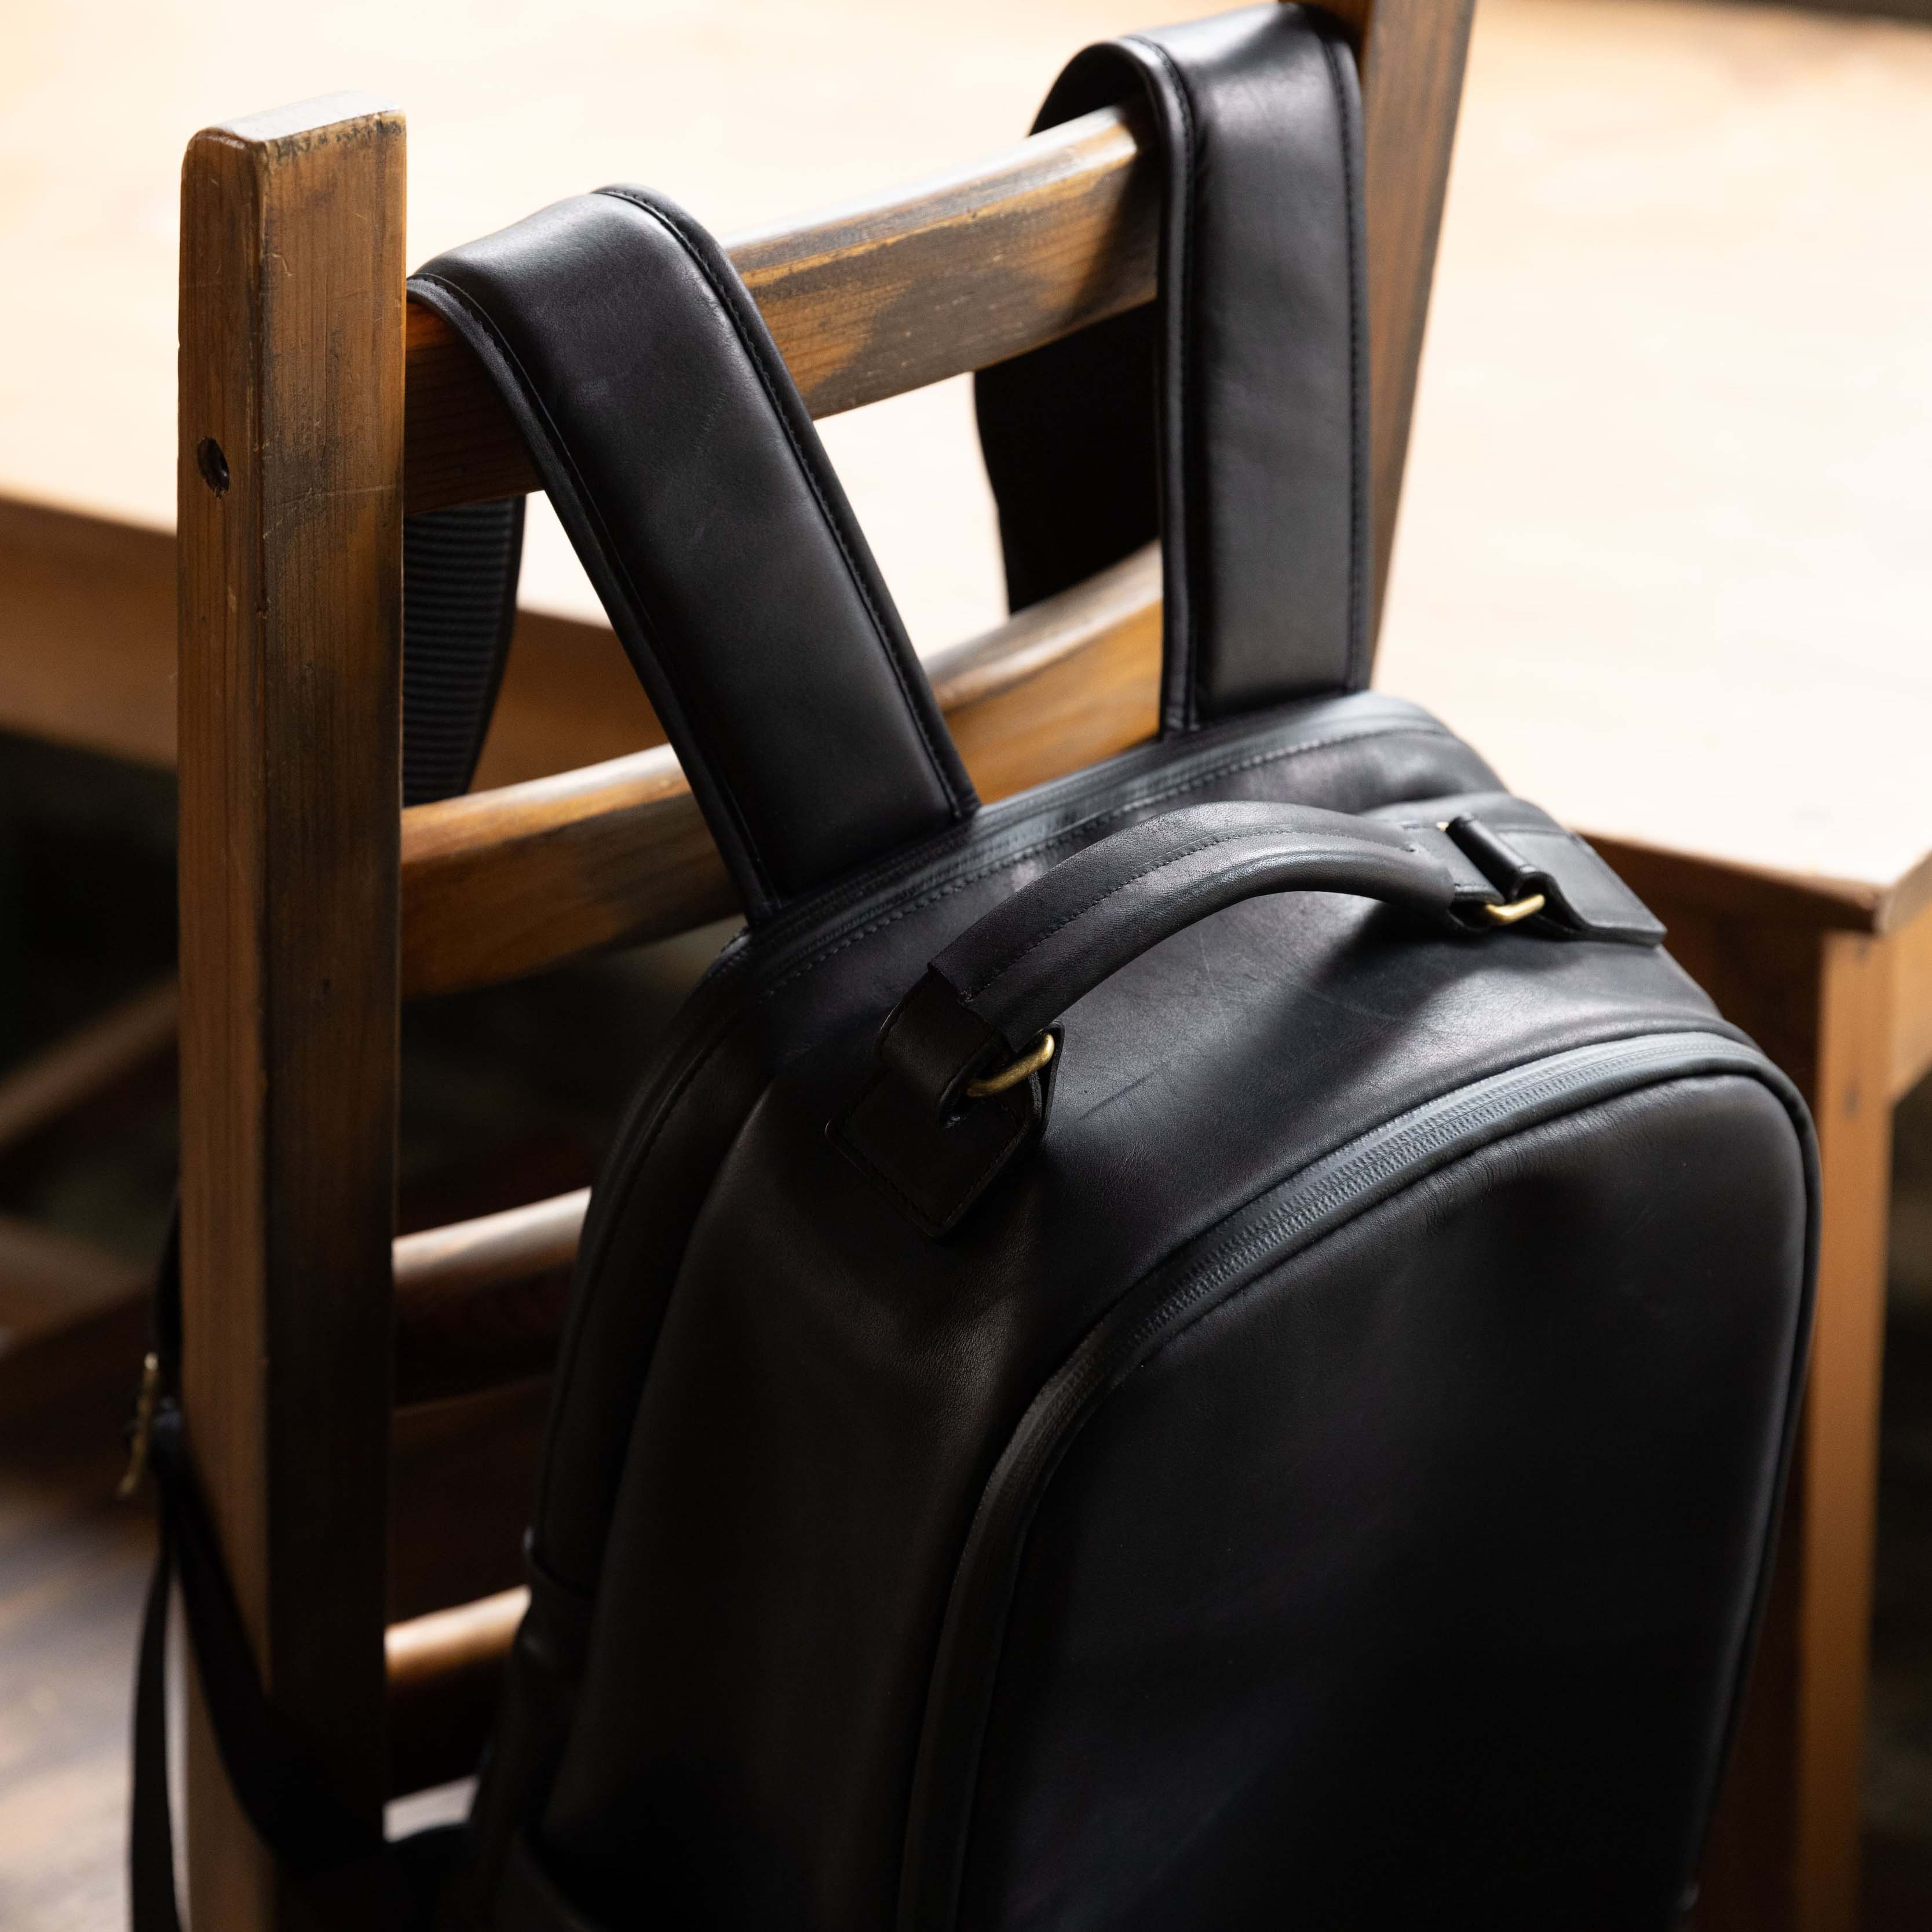 Elegant “waterproof leather backpack” for people over 30